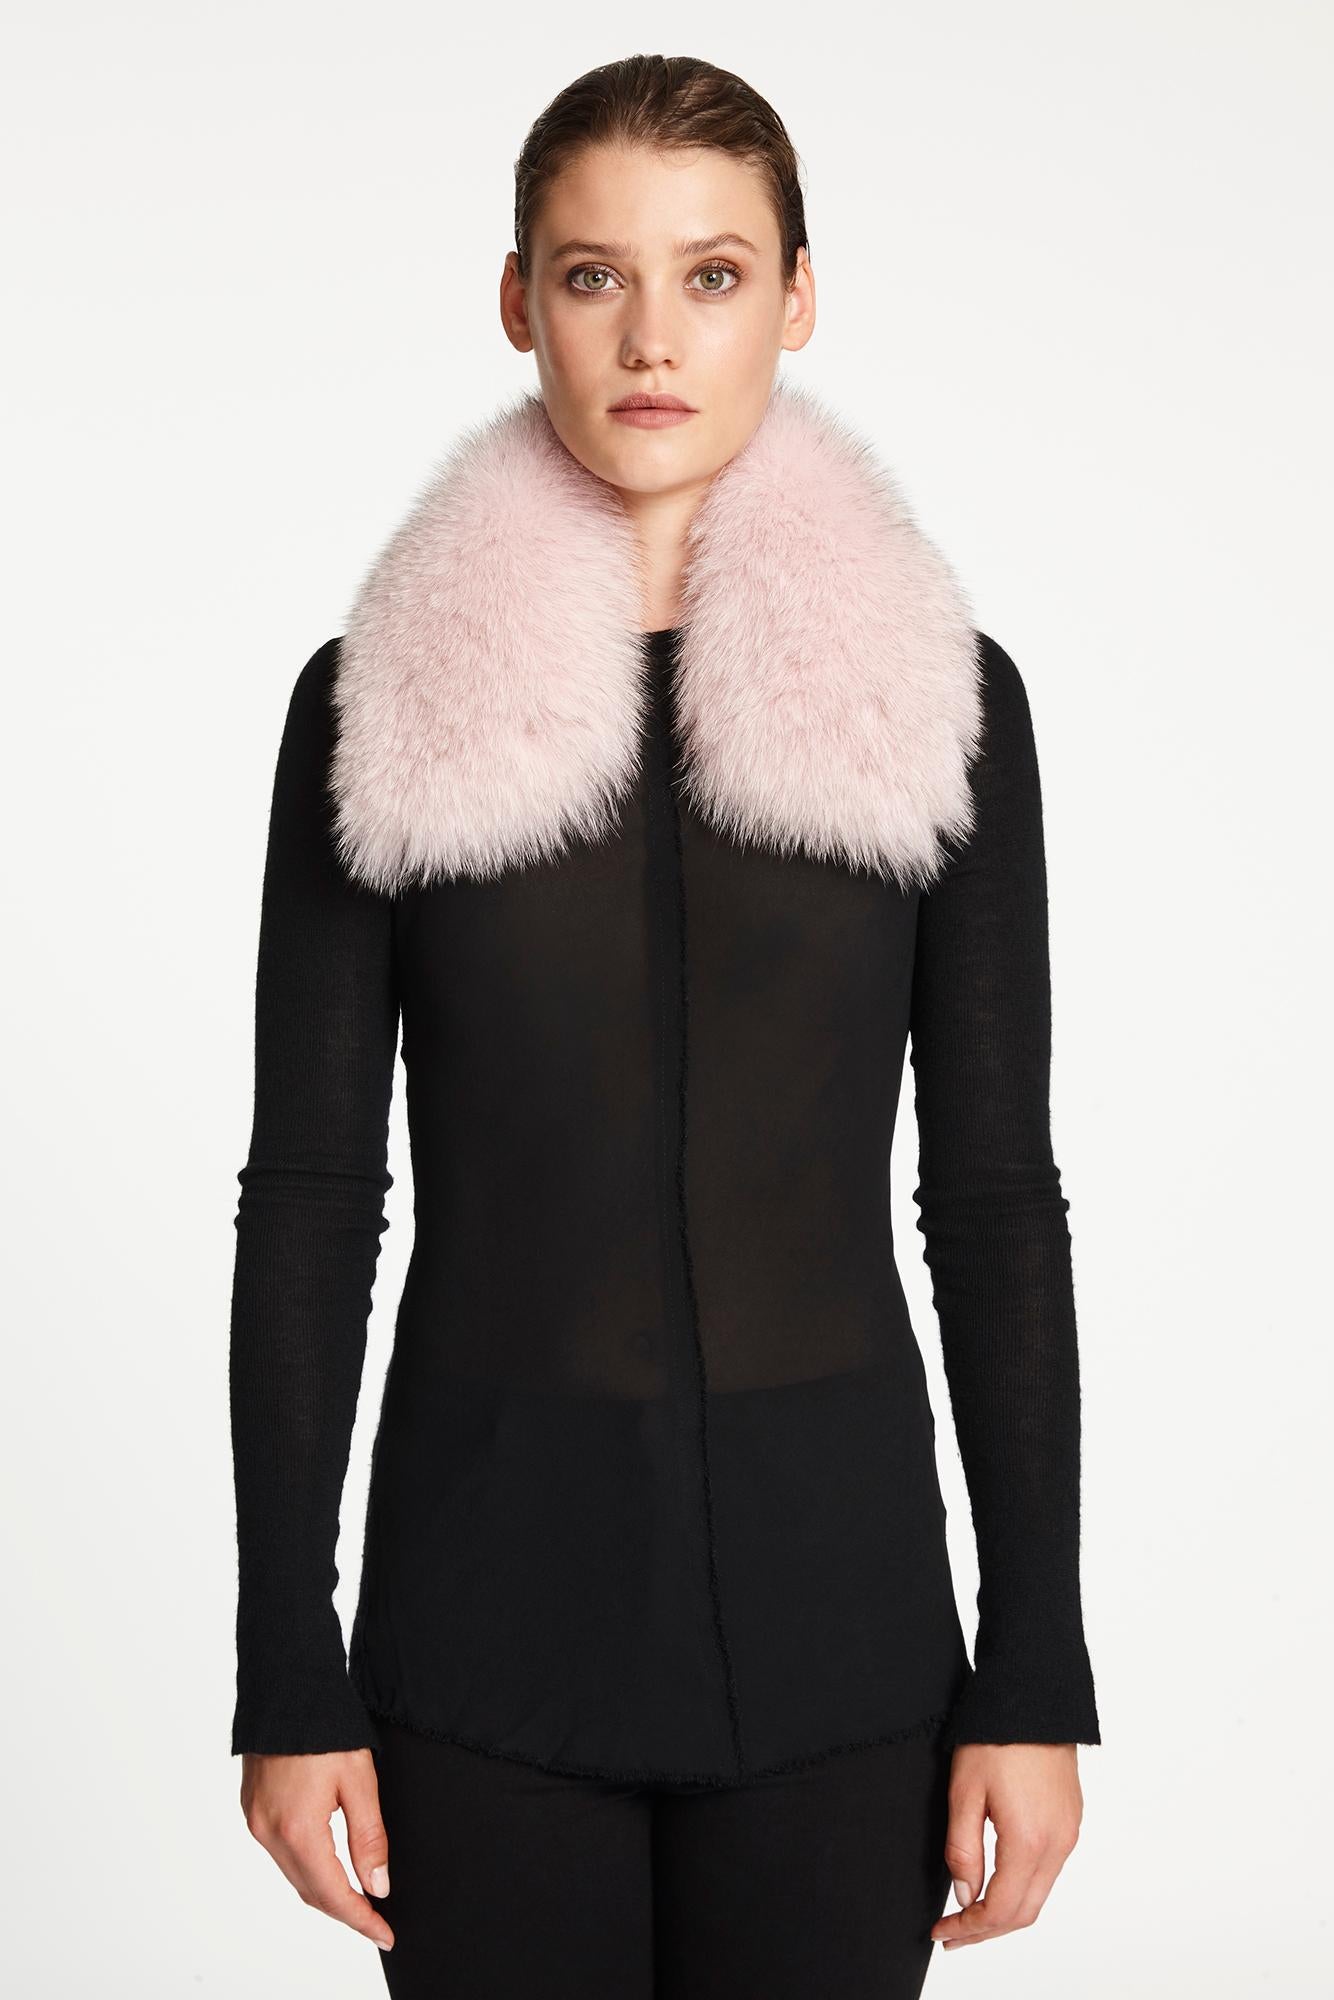 Women's or Men's Verheyen London Peter Pan Collar in Pastel Rose Pink Fox Fur - Brand New 